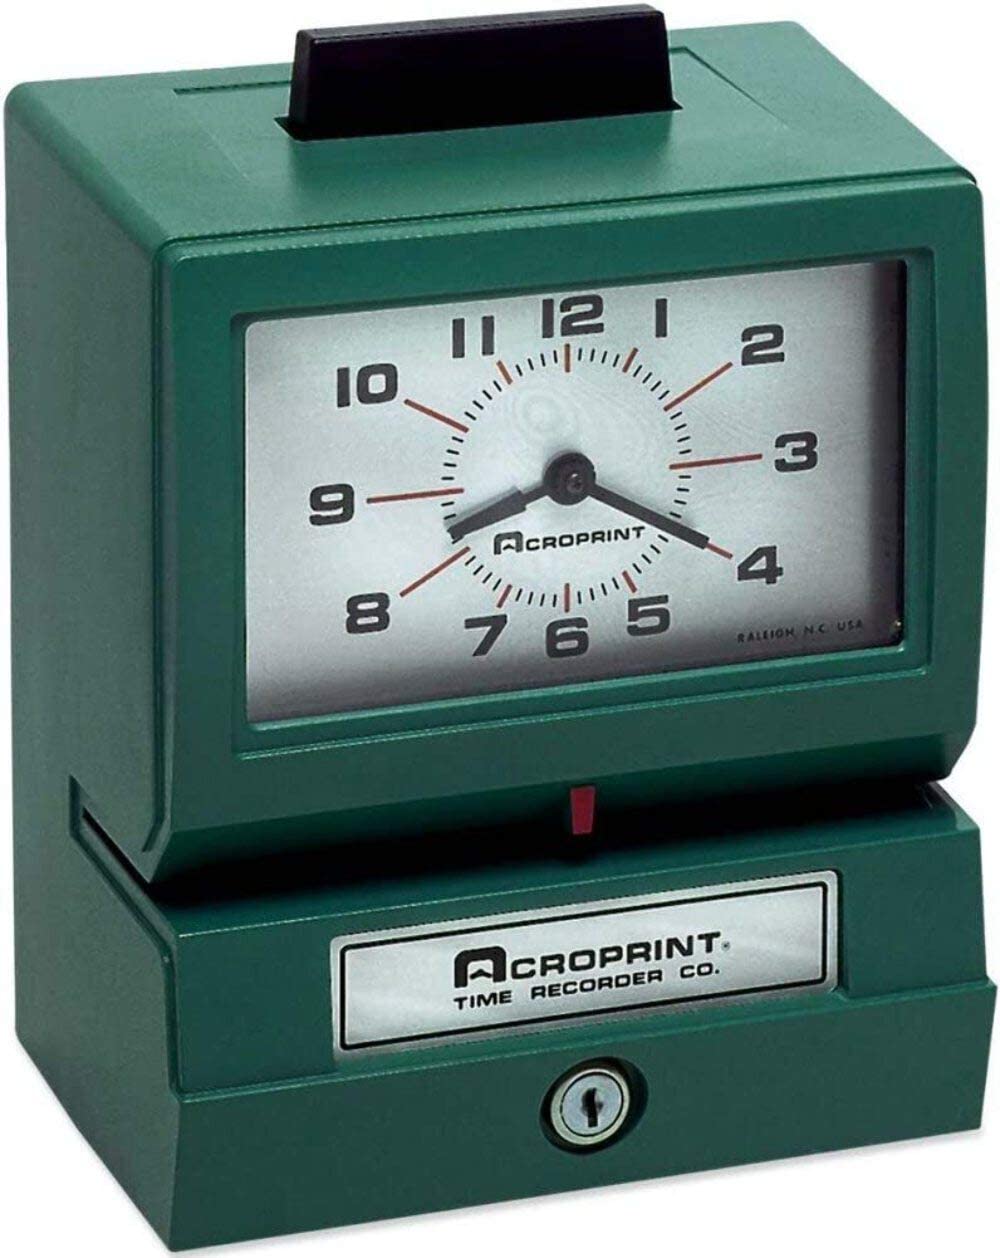 3. Acroprint Analog Manual Print Time Clock